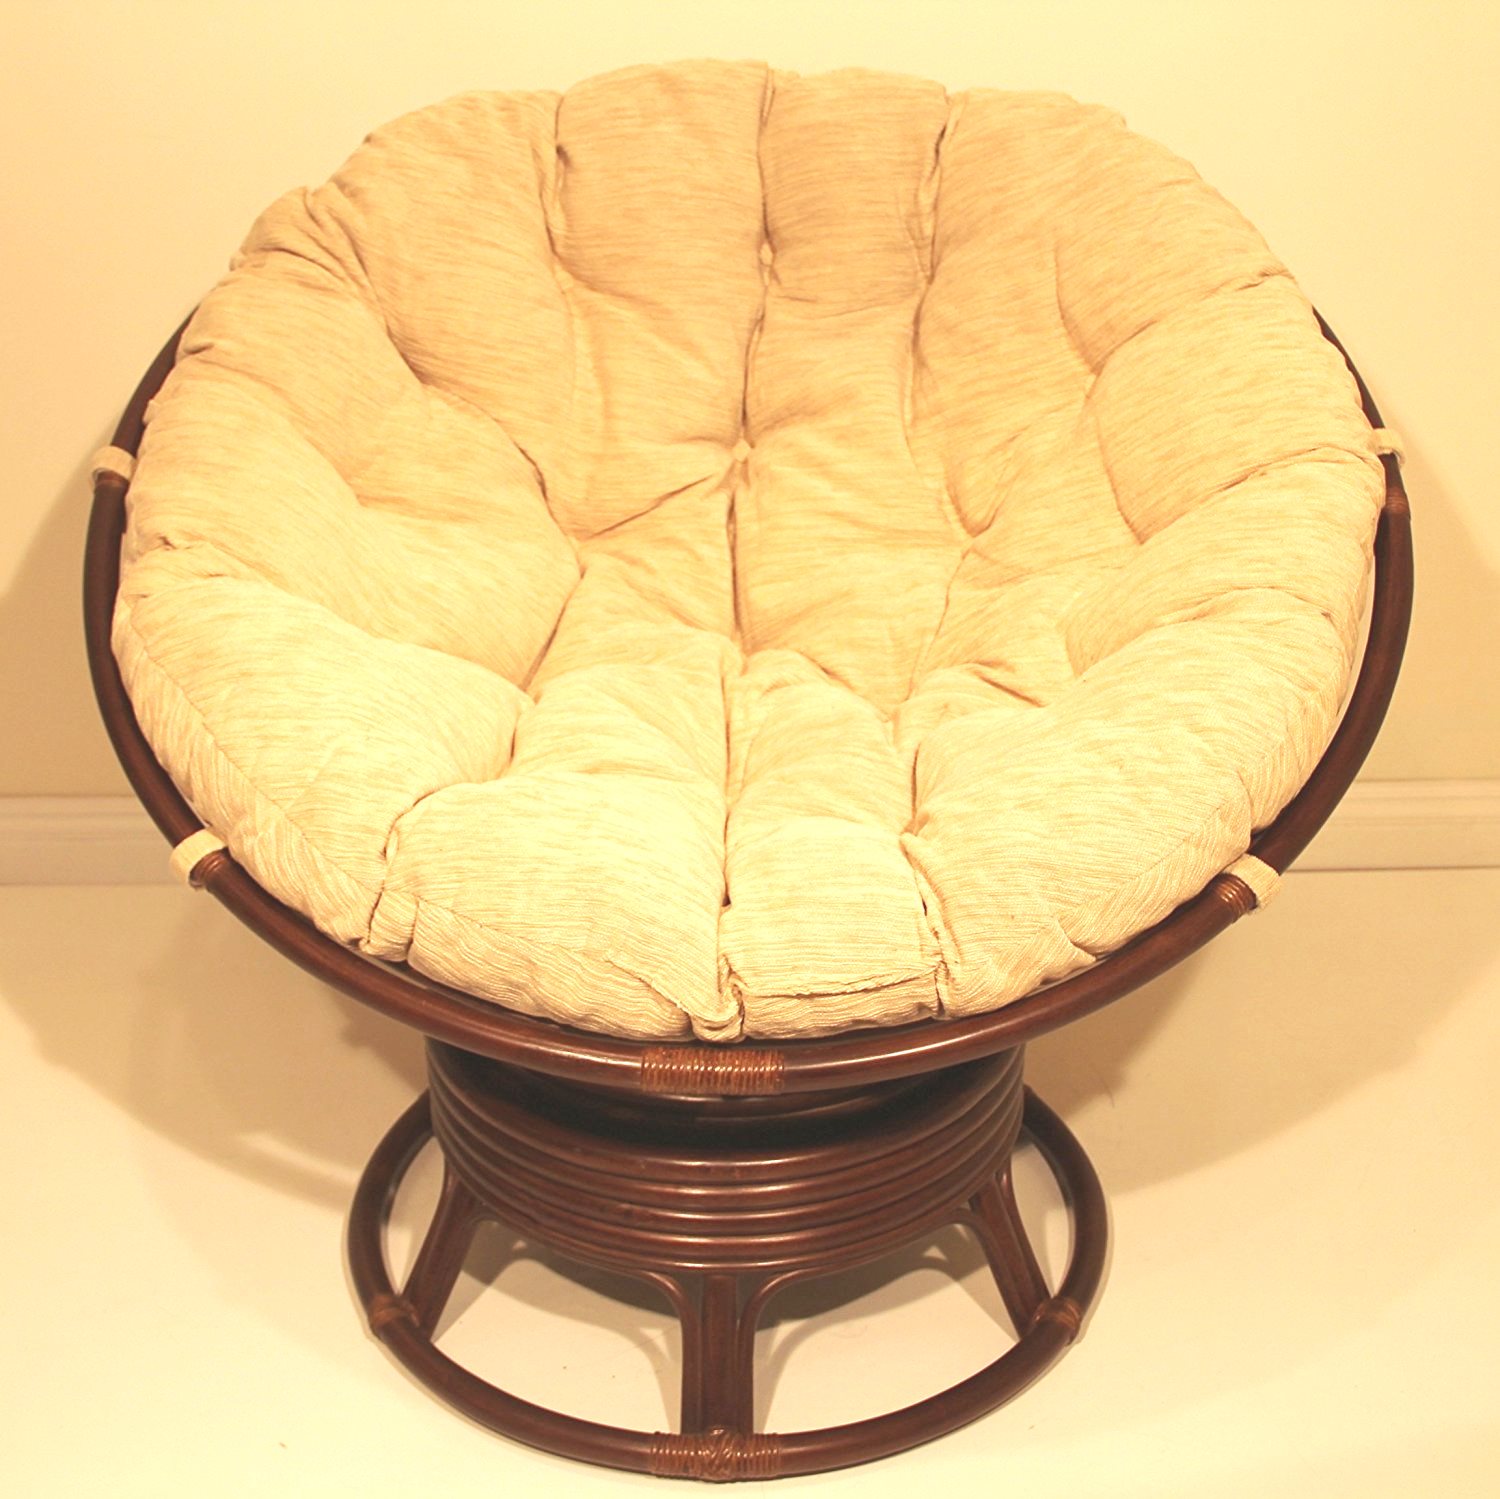 Buy Papasan Swivel Chair in USA, best price, free shipping